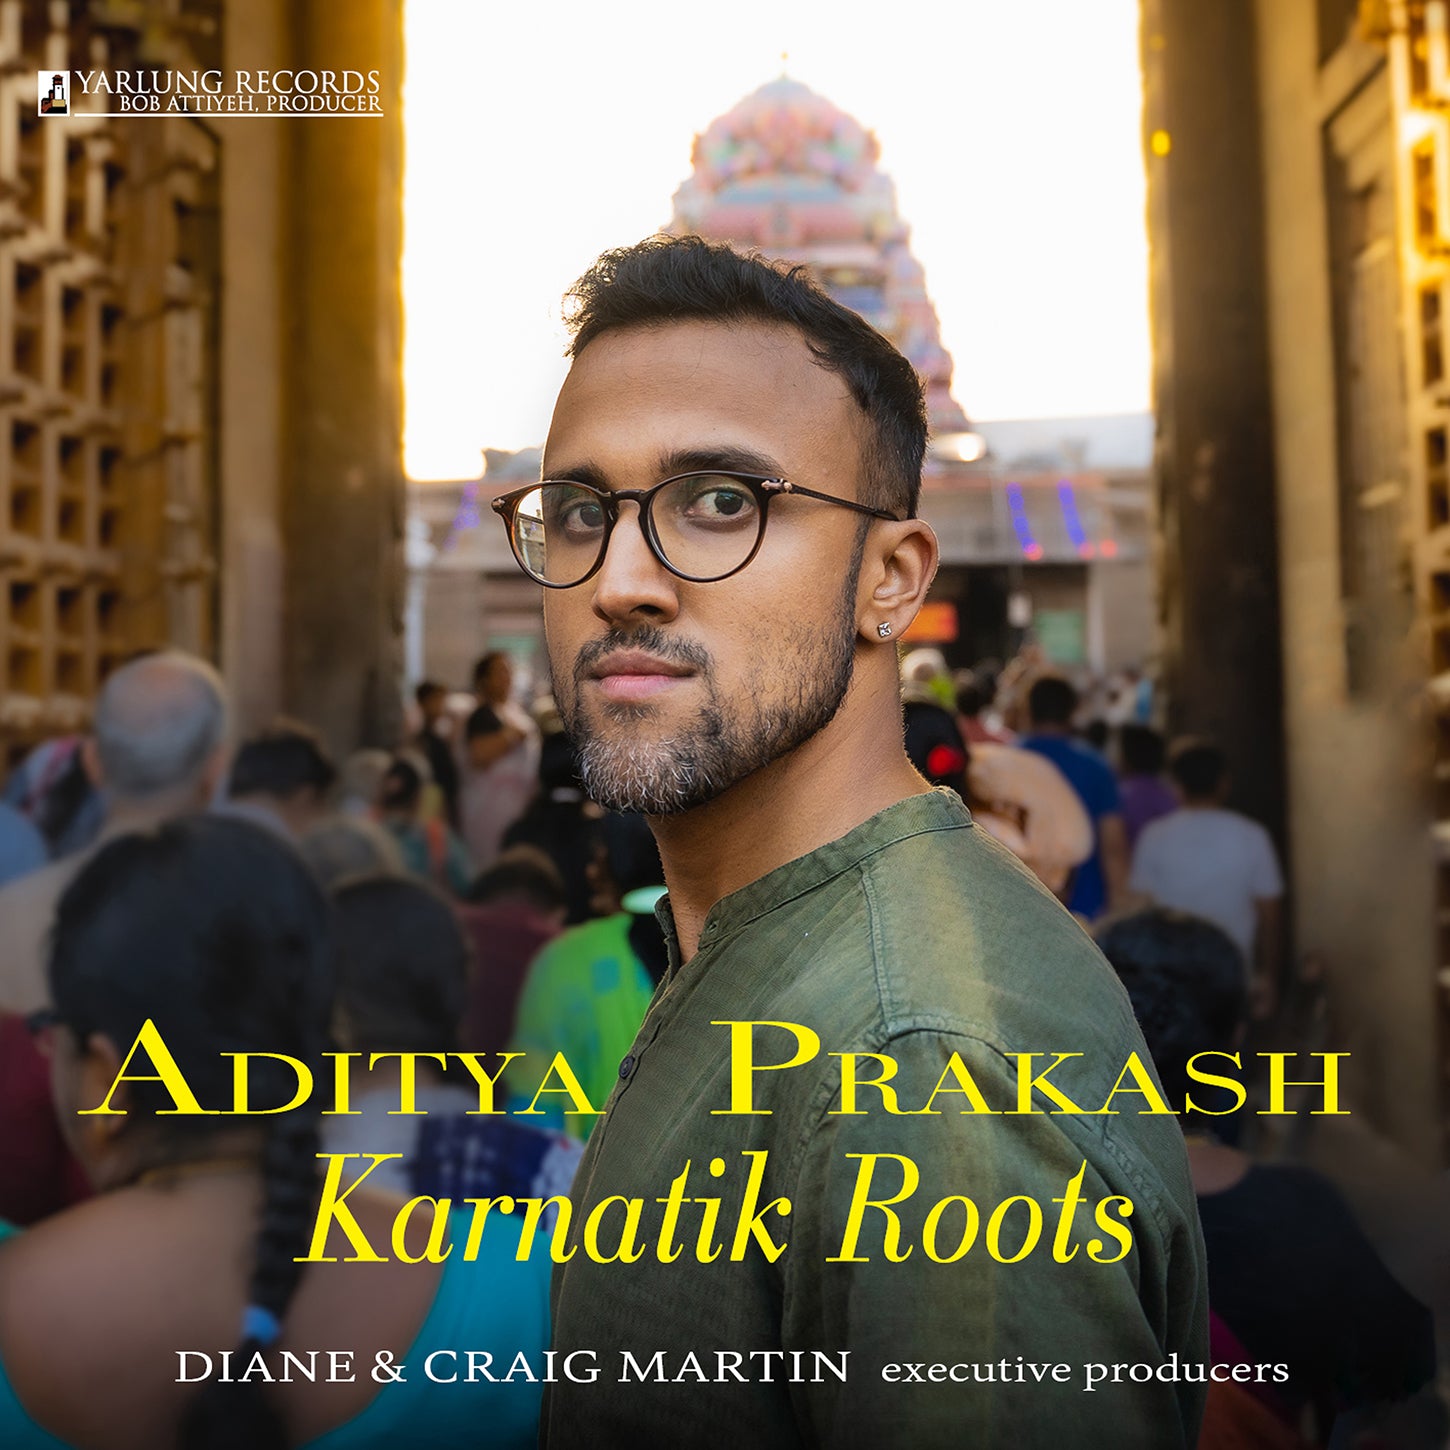 Karnatik Roots / Aditya Prakash